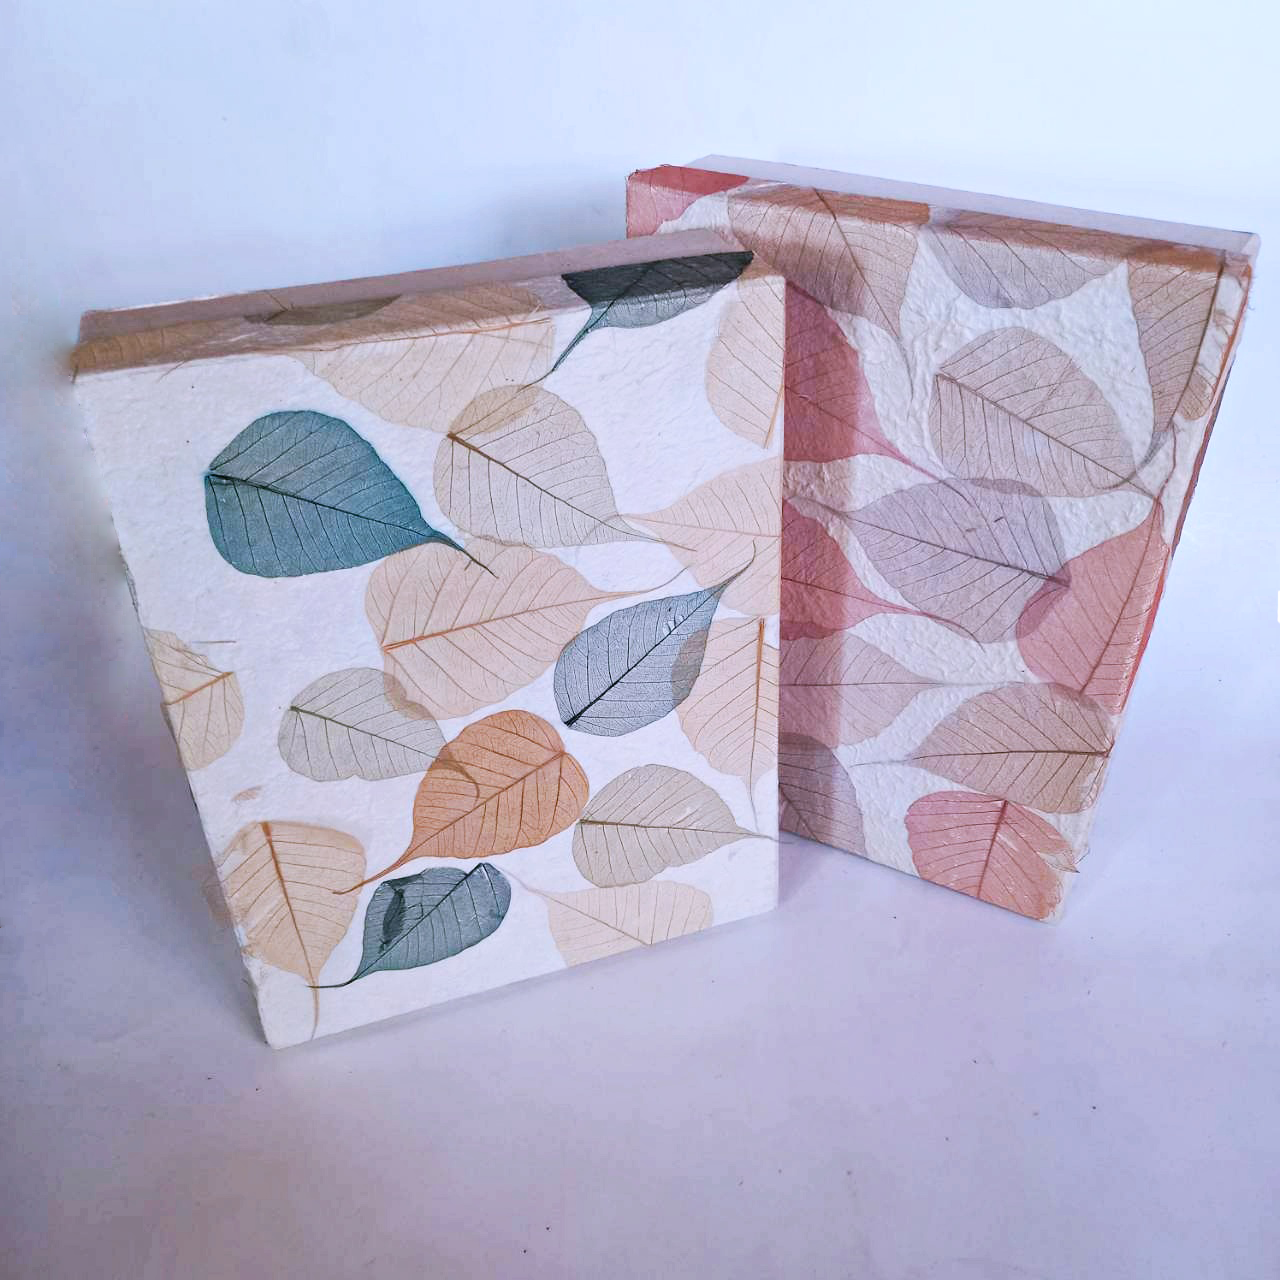 Mulberry paper box with bodhi leaves, กล่องกระดาษสาแต่งใบโพธิ์